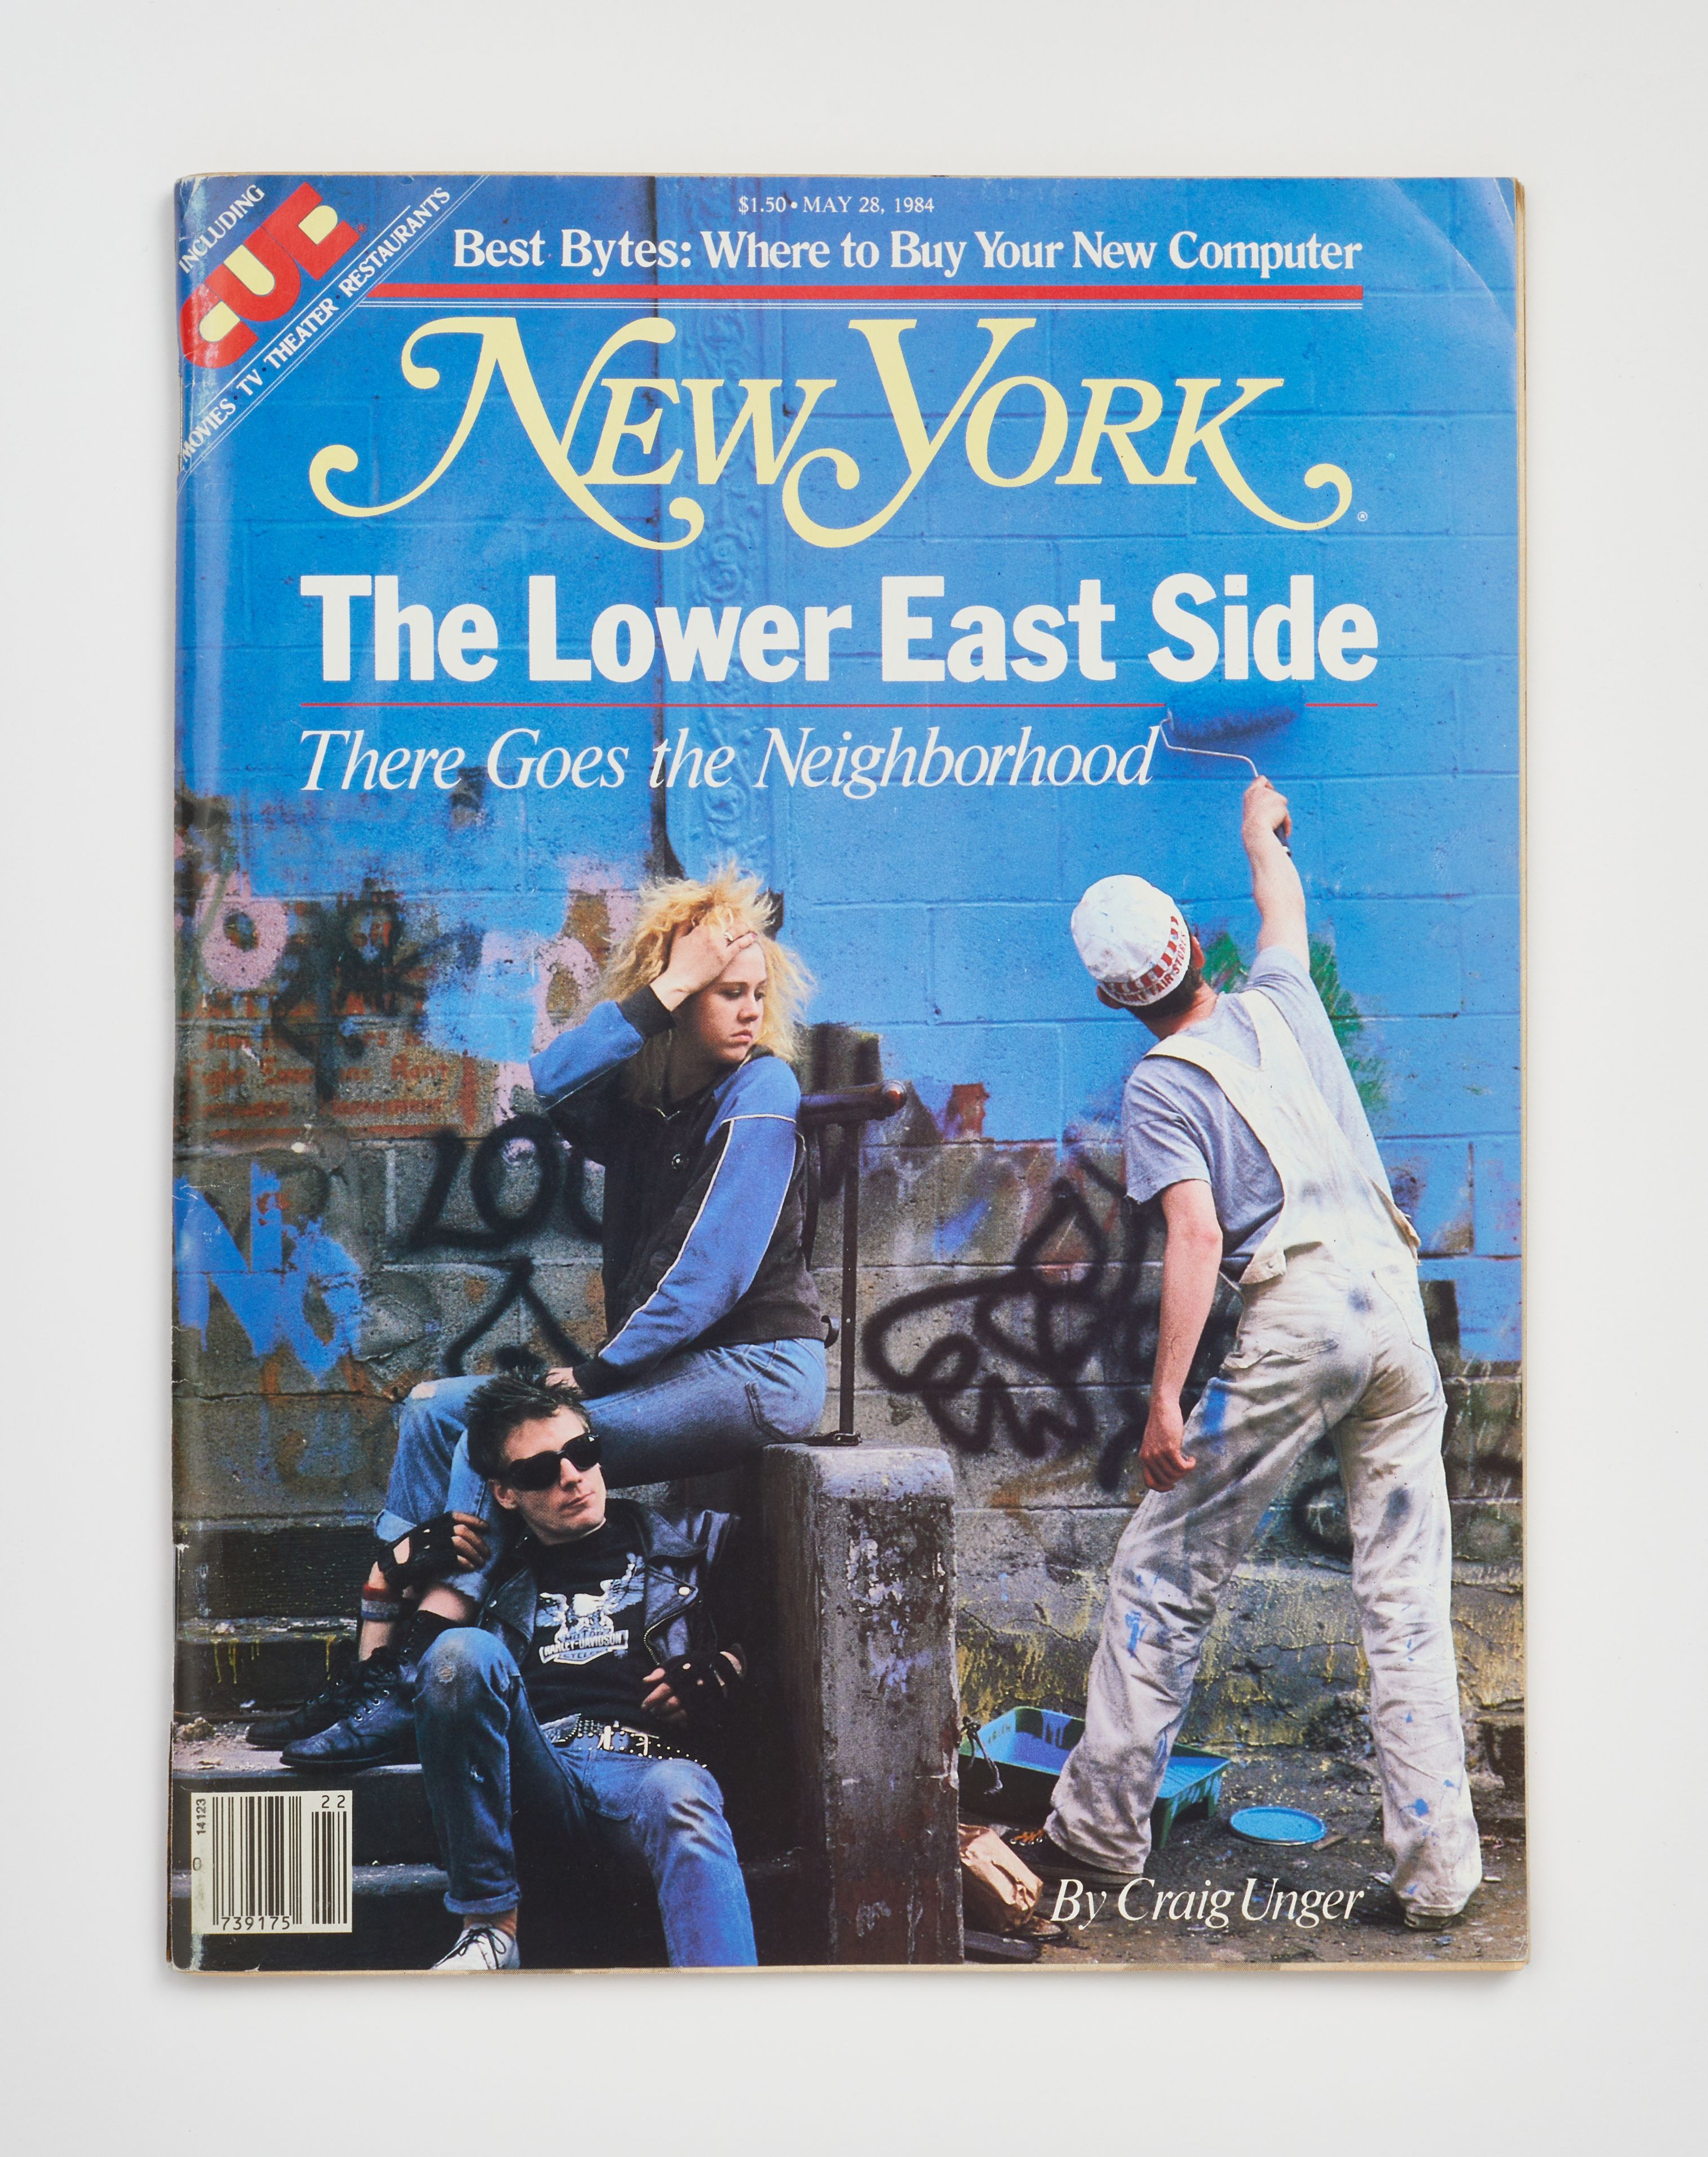 Lower East Side  Neighborhood Guide